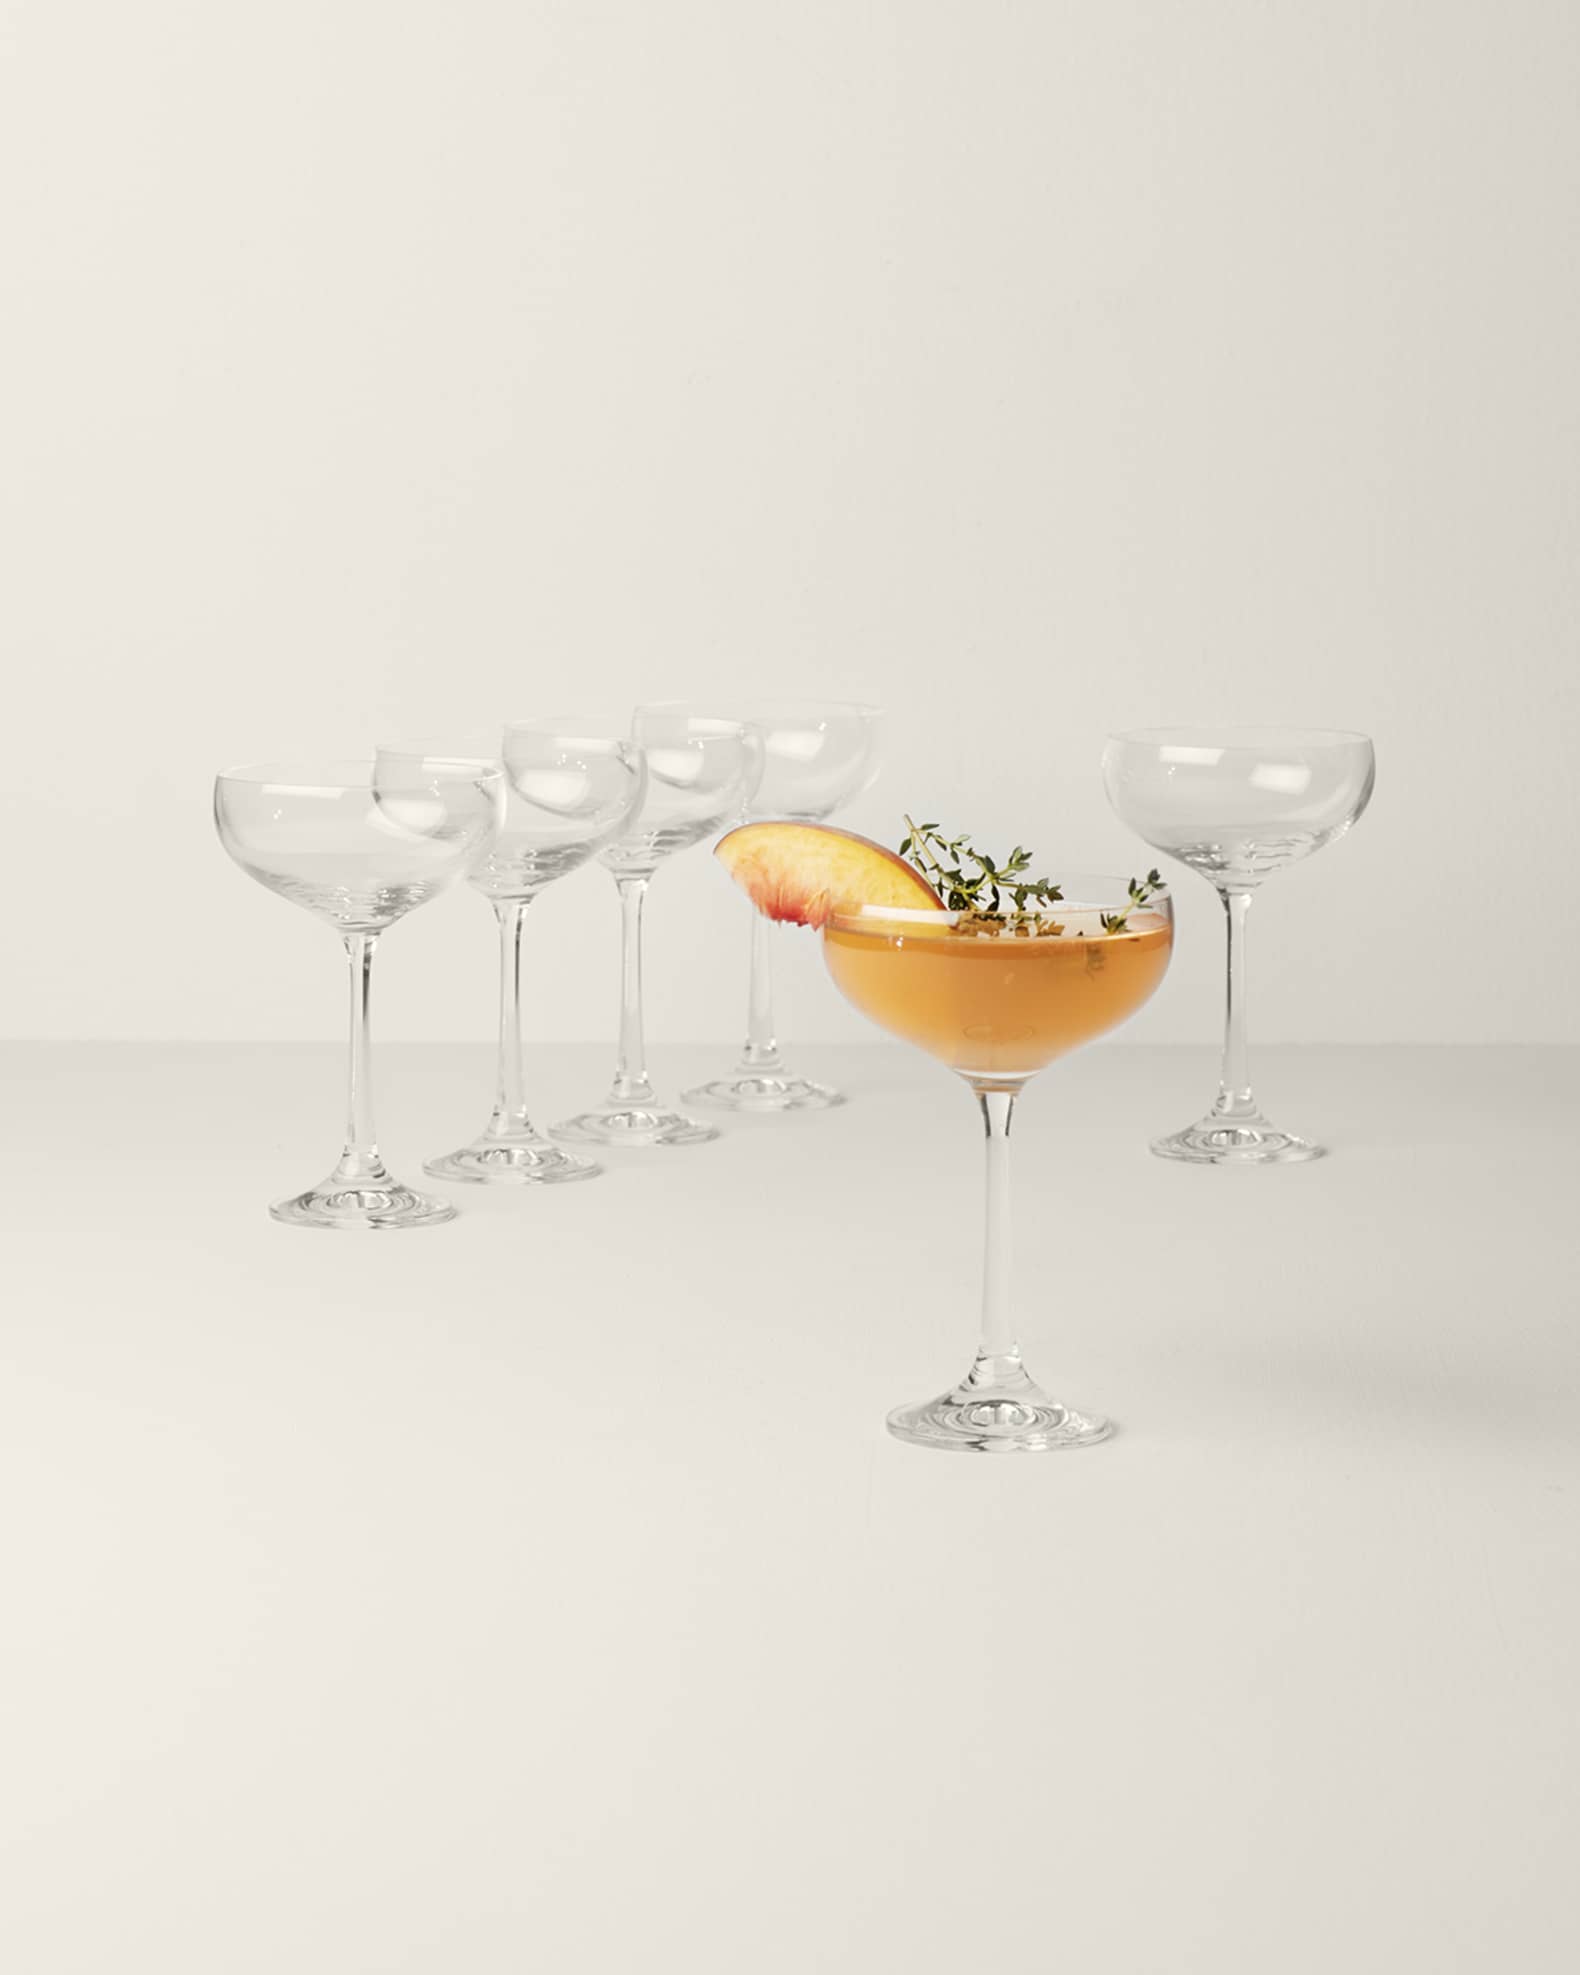 Lenox Tuscany Classics Coupe Cocktail Glass Set, Set of 6